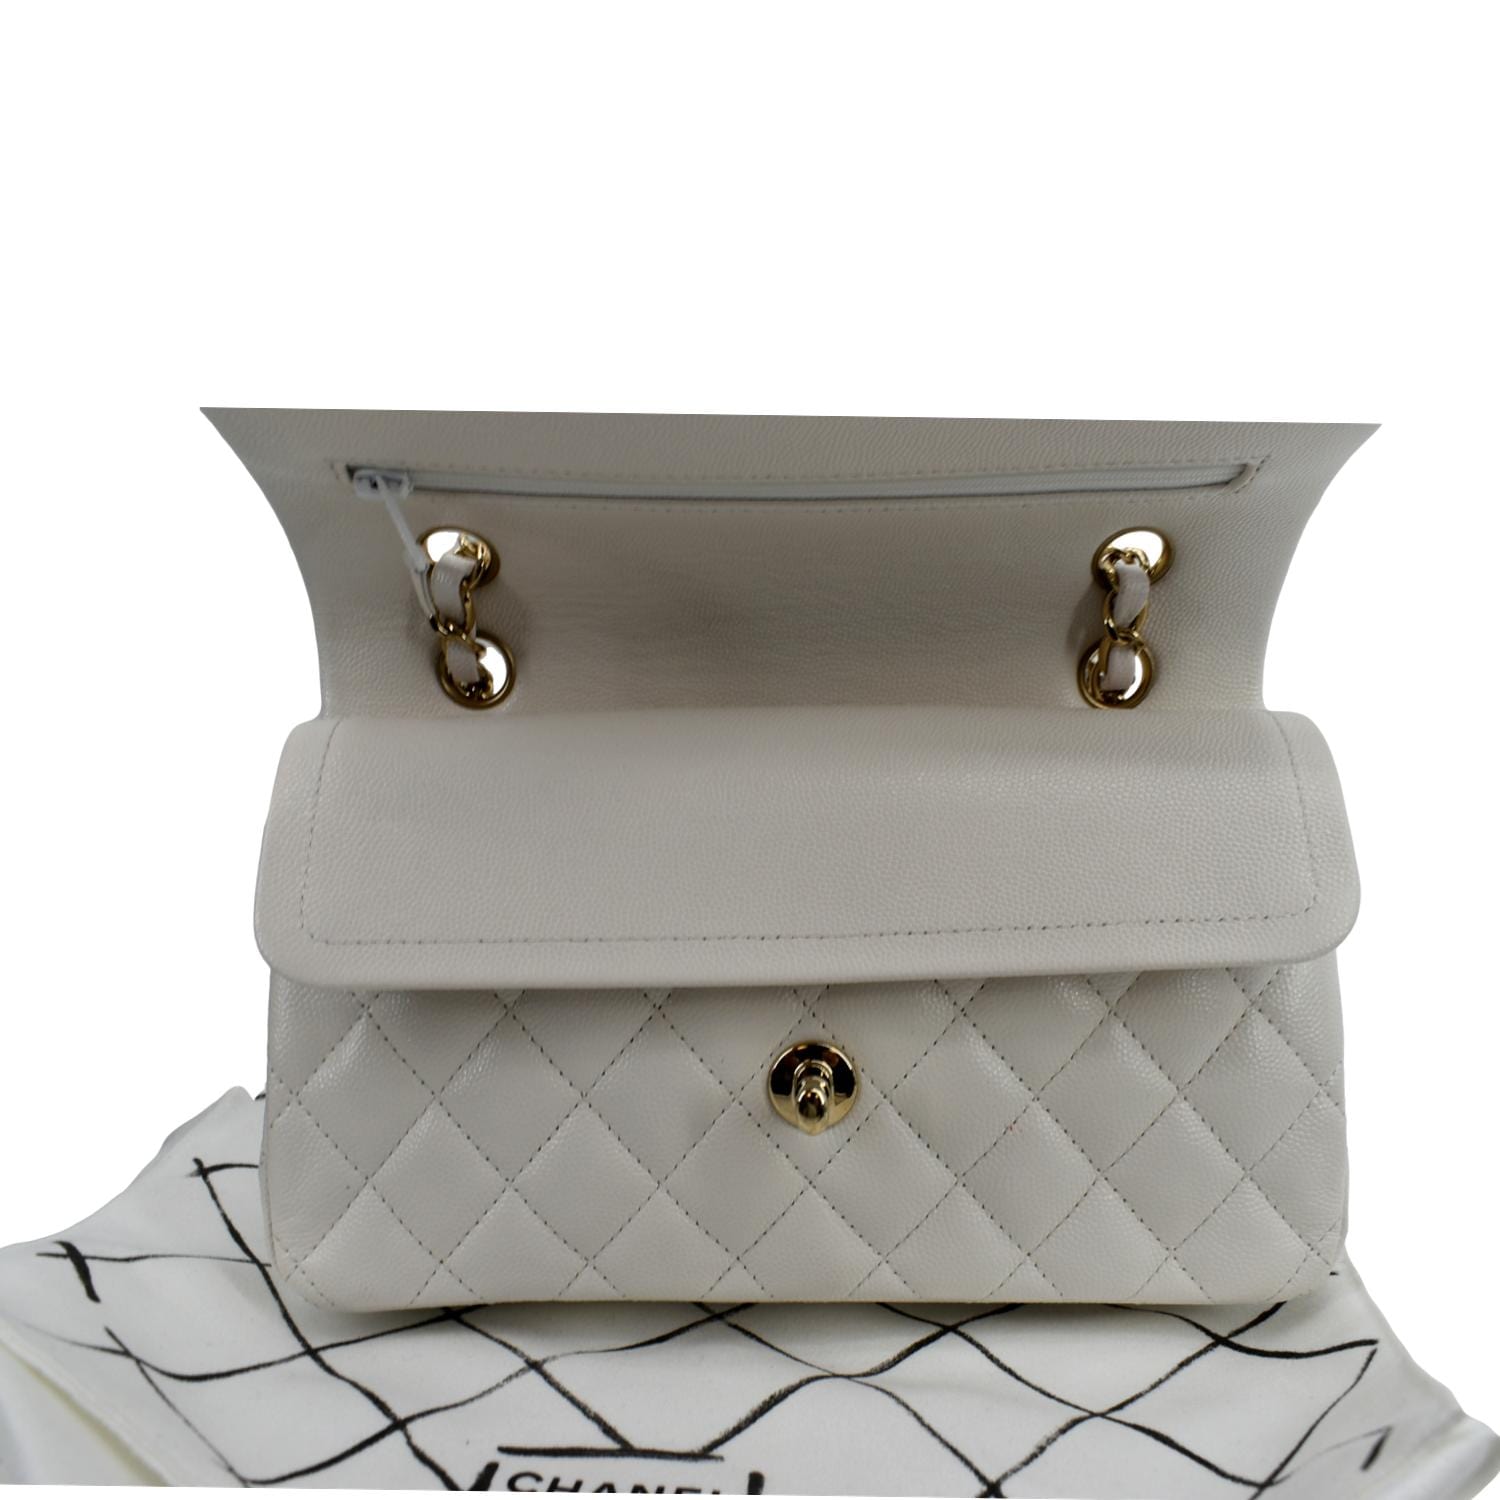 White leather flap purse